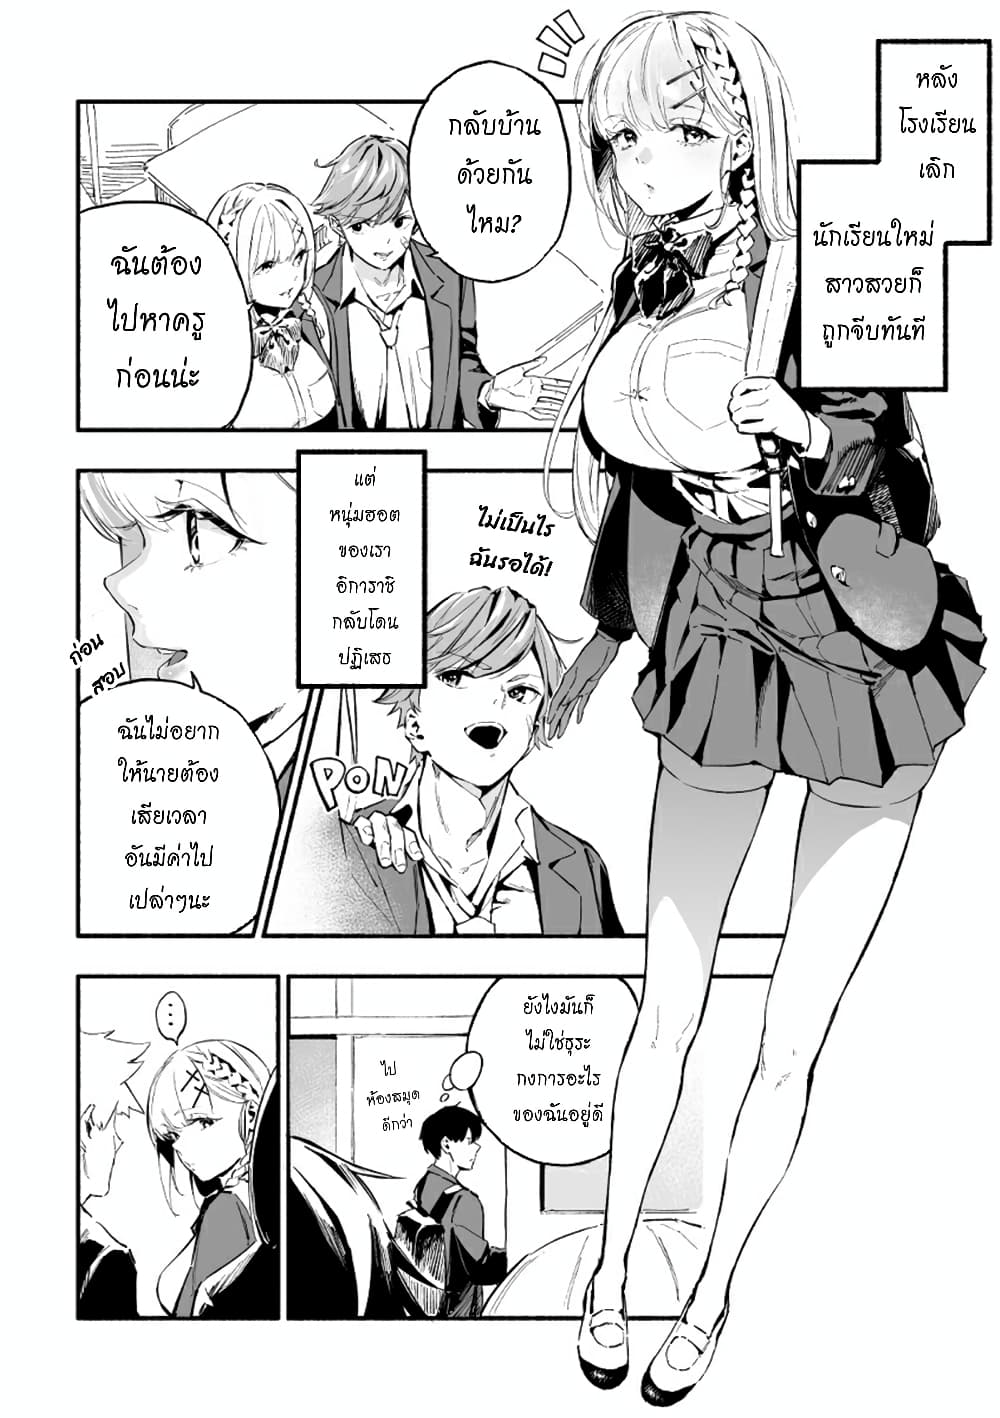 The Angelic Transfer Student and Mastophobia-kun 3-3